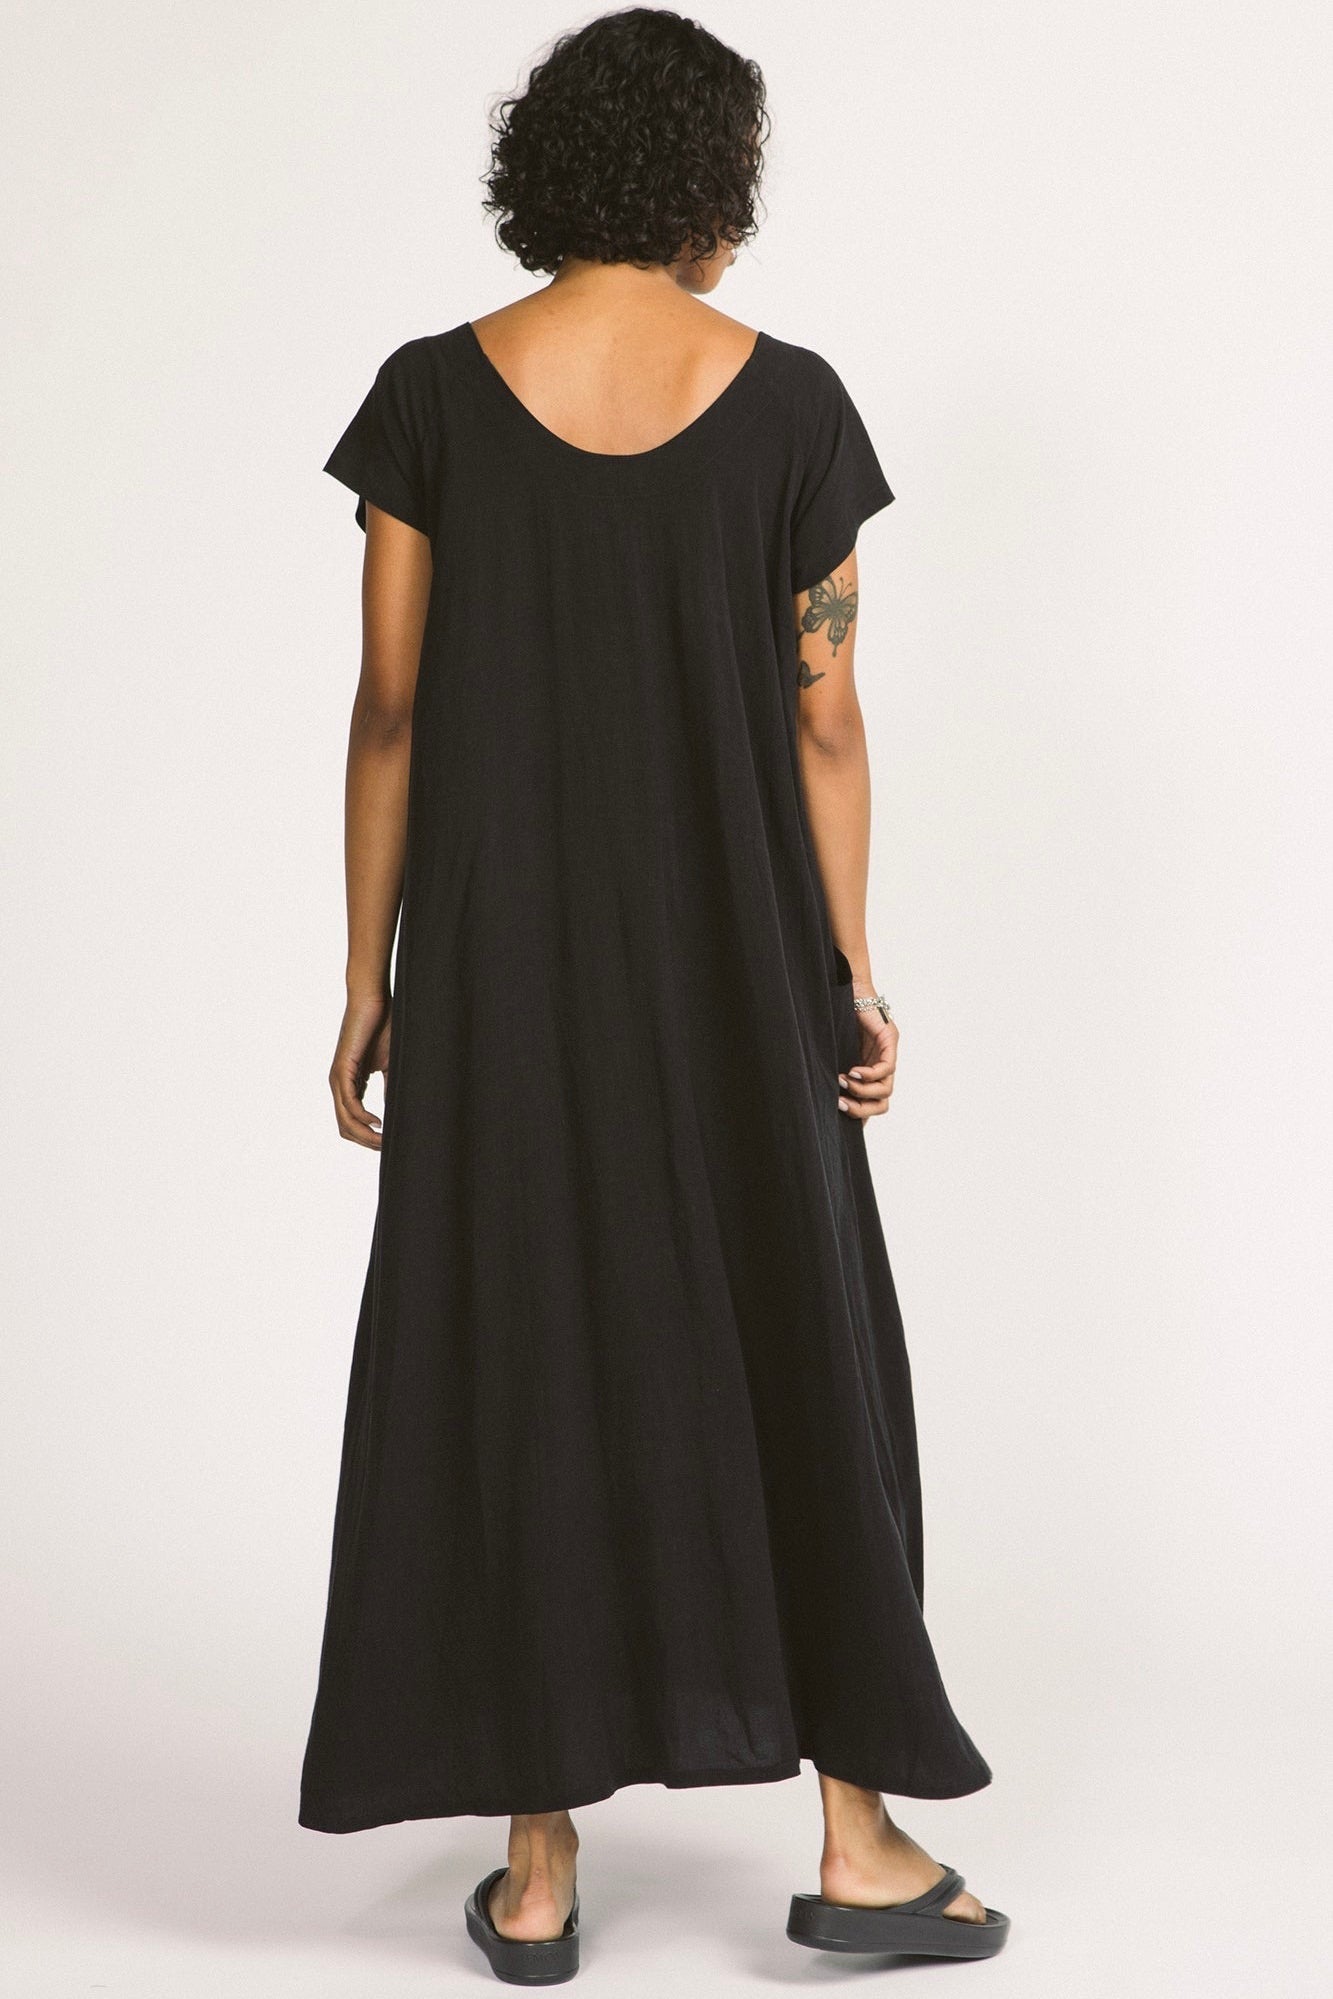 Allison Wonderland: Enola Dress Black